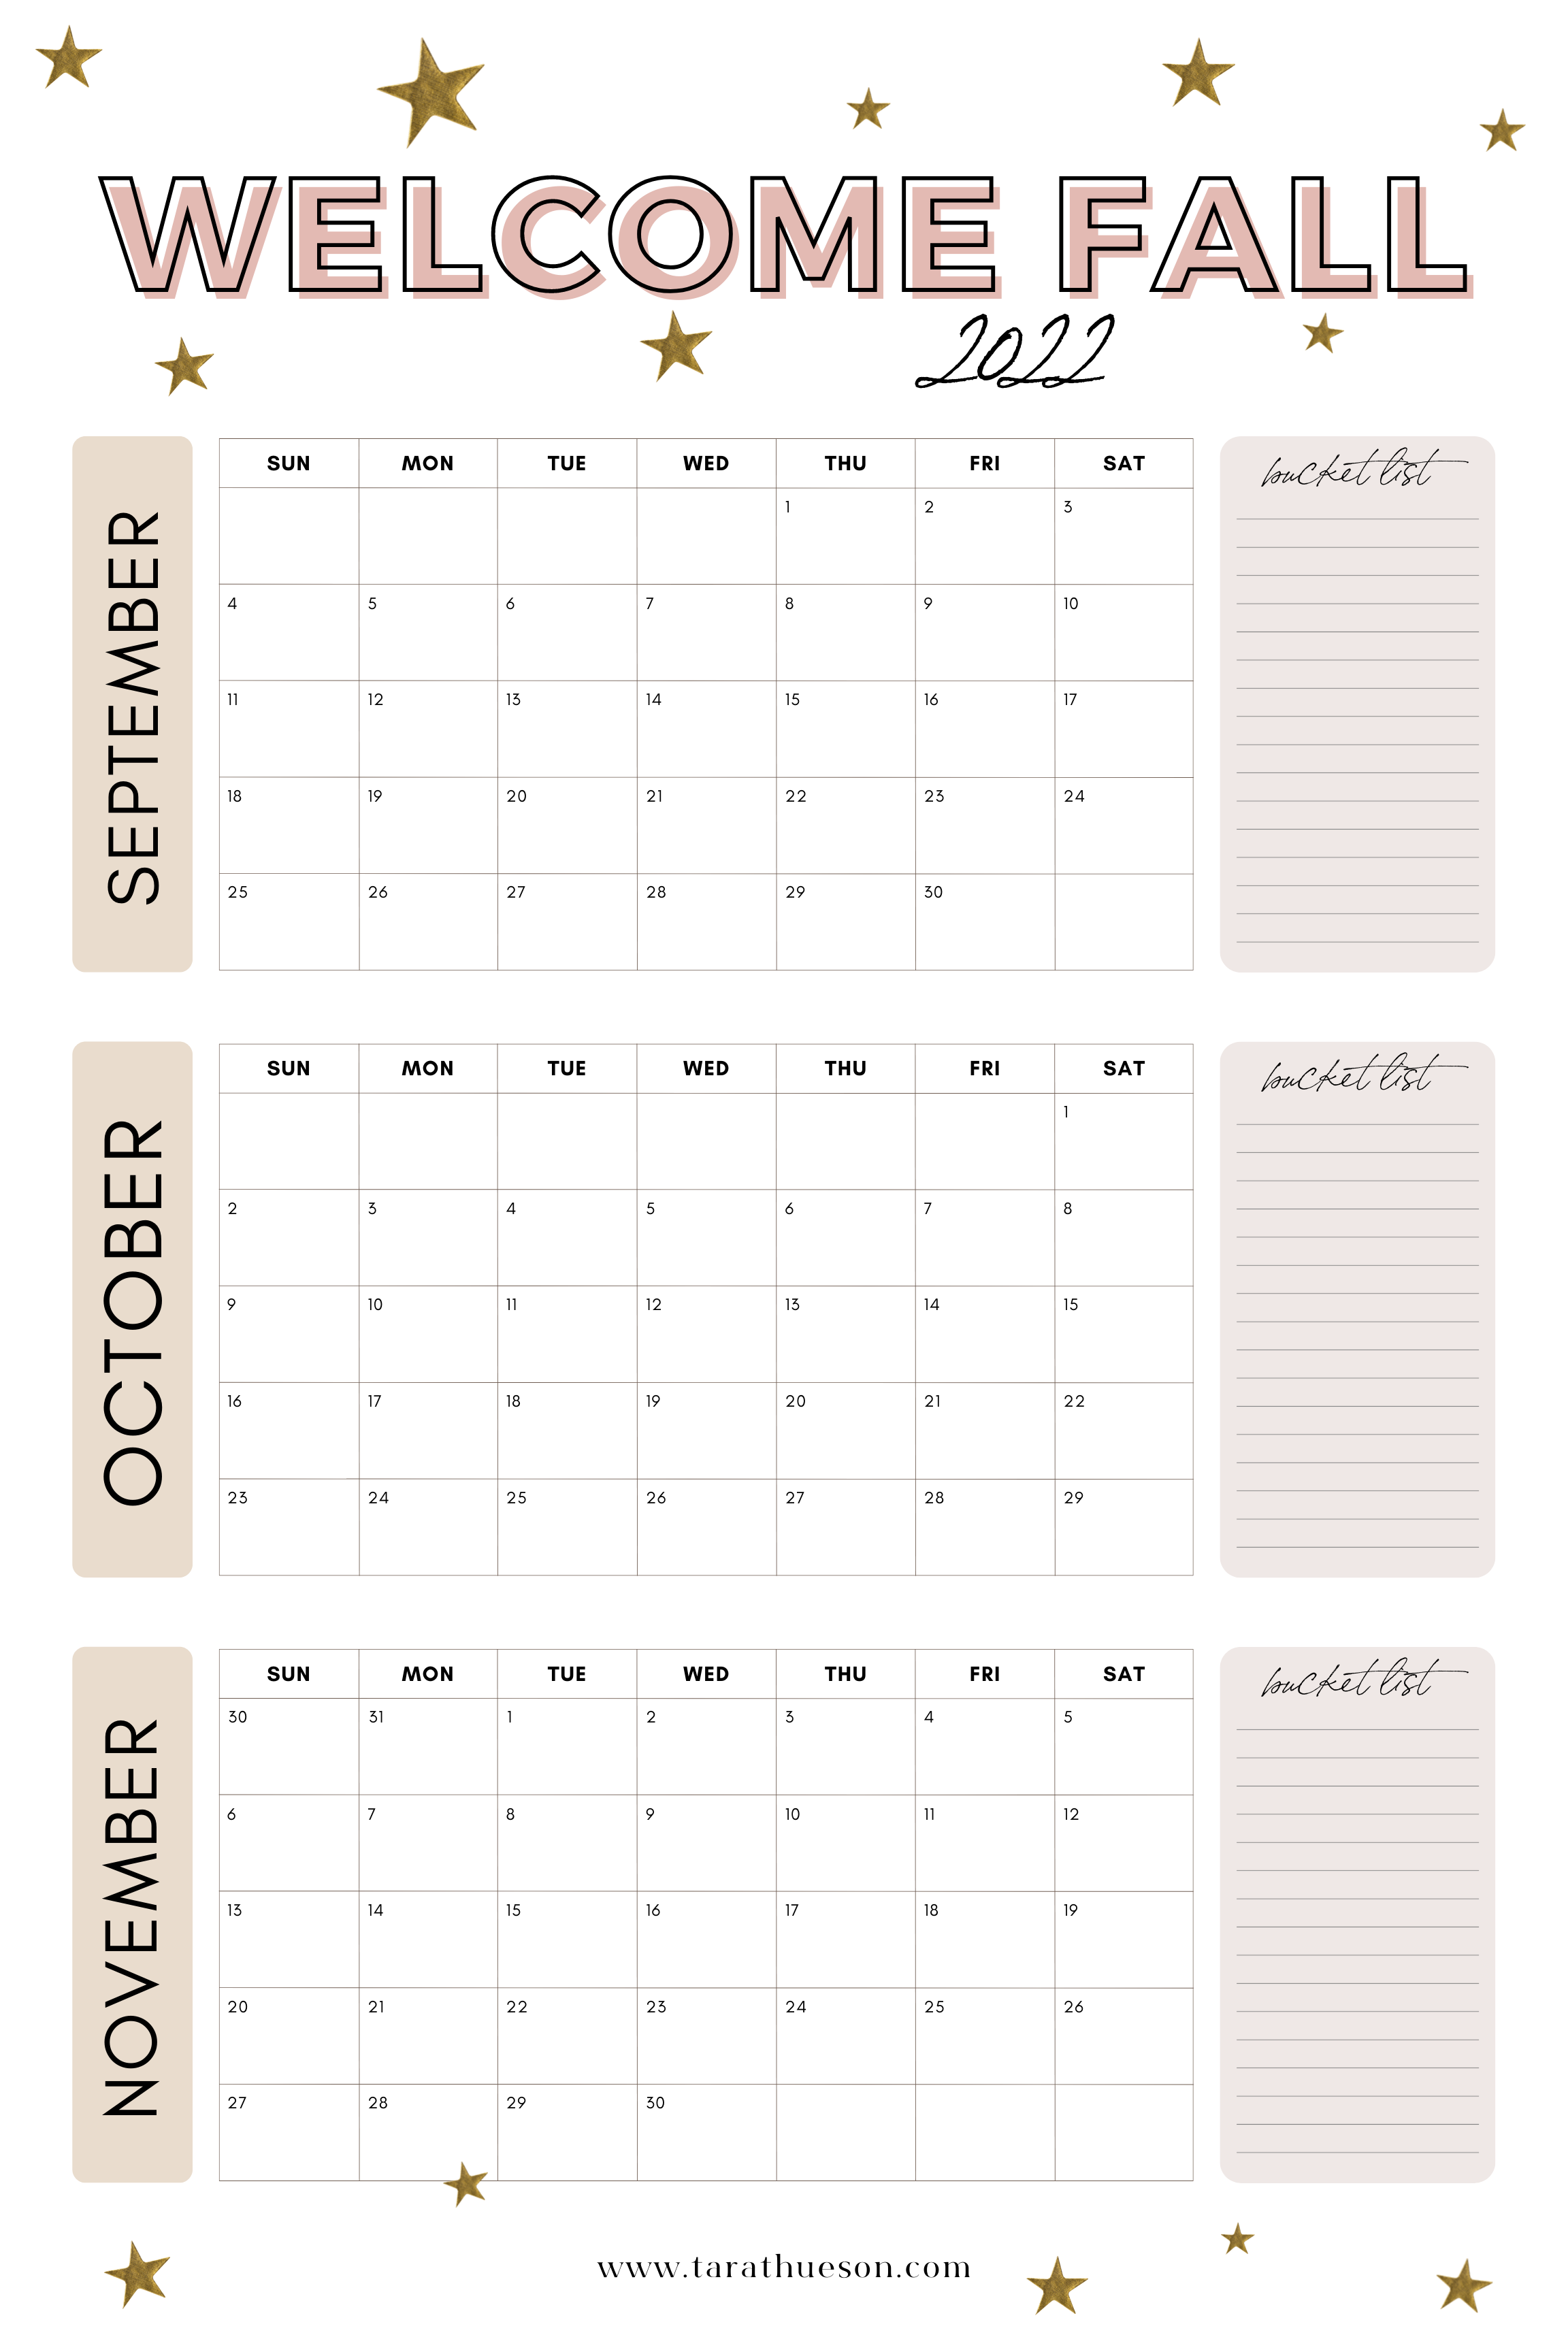 Printable Schedule